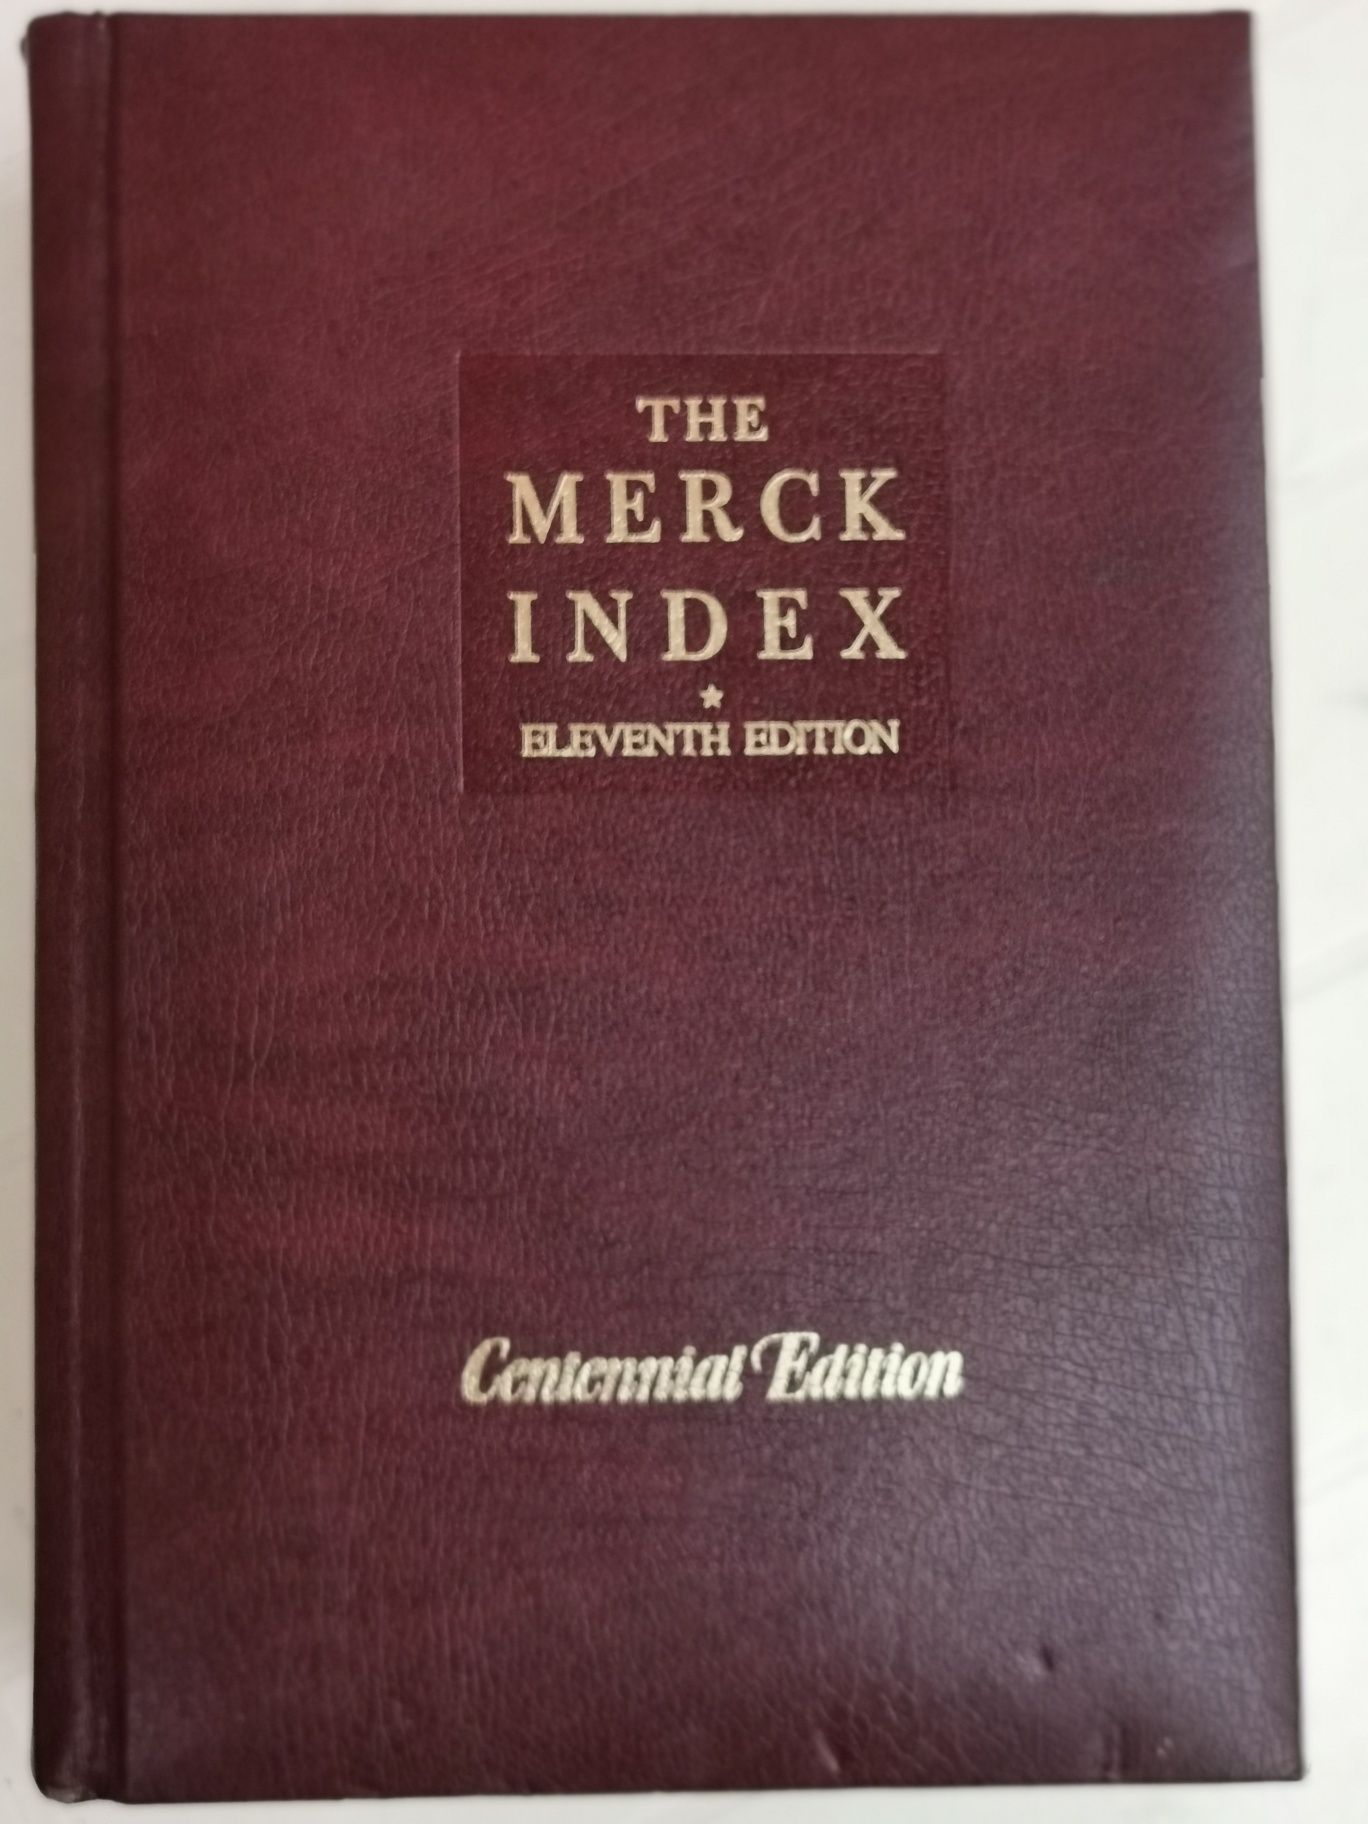 The Merck Index Eleventh Edition EDITIA 1989